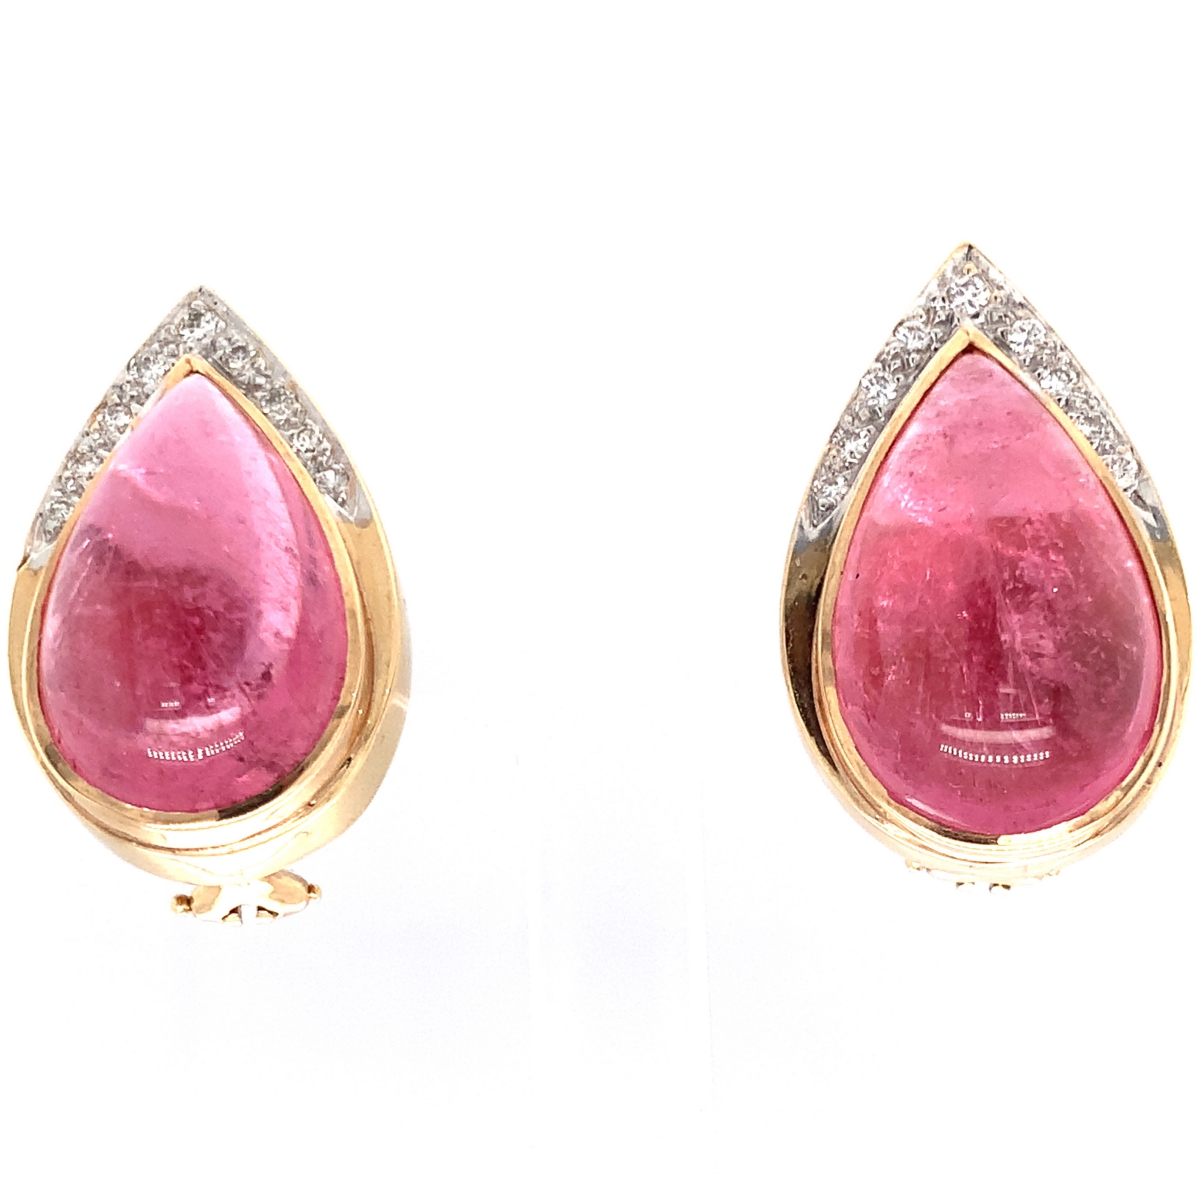 Pink and Mint Tourmaline Drop Earrings with Diamonds | Shreve & Co.